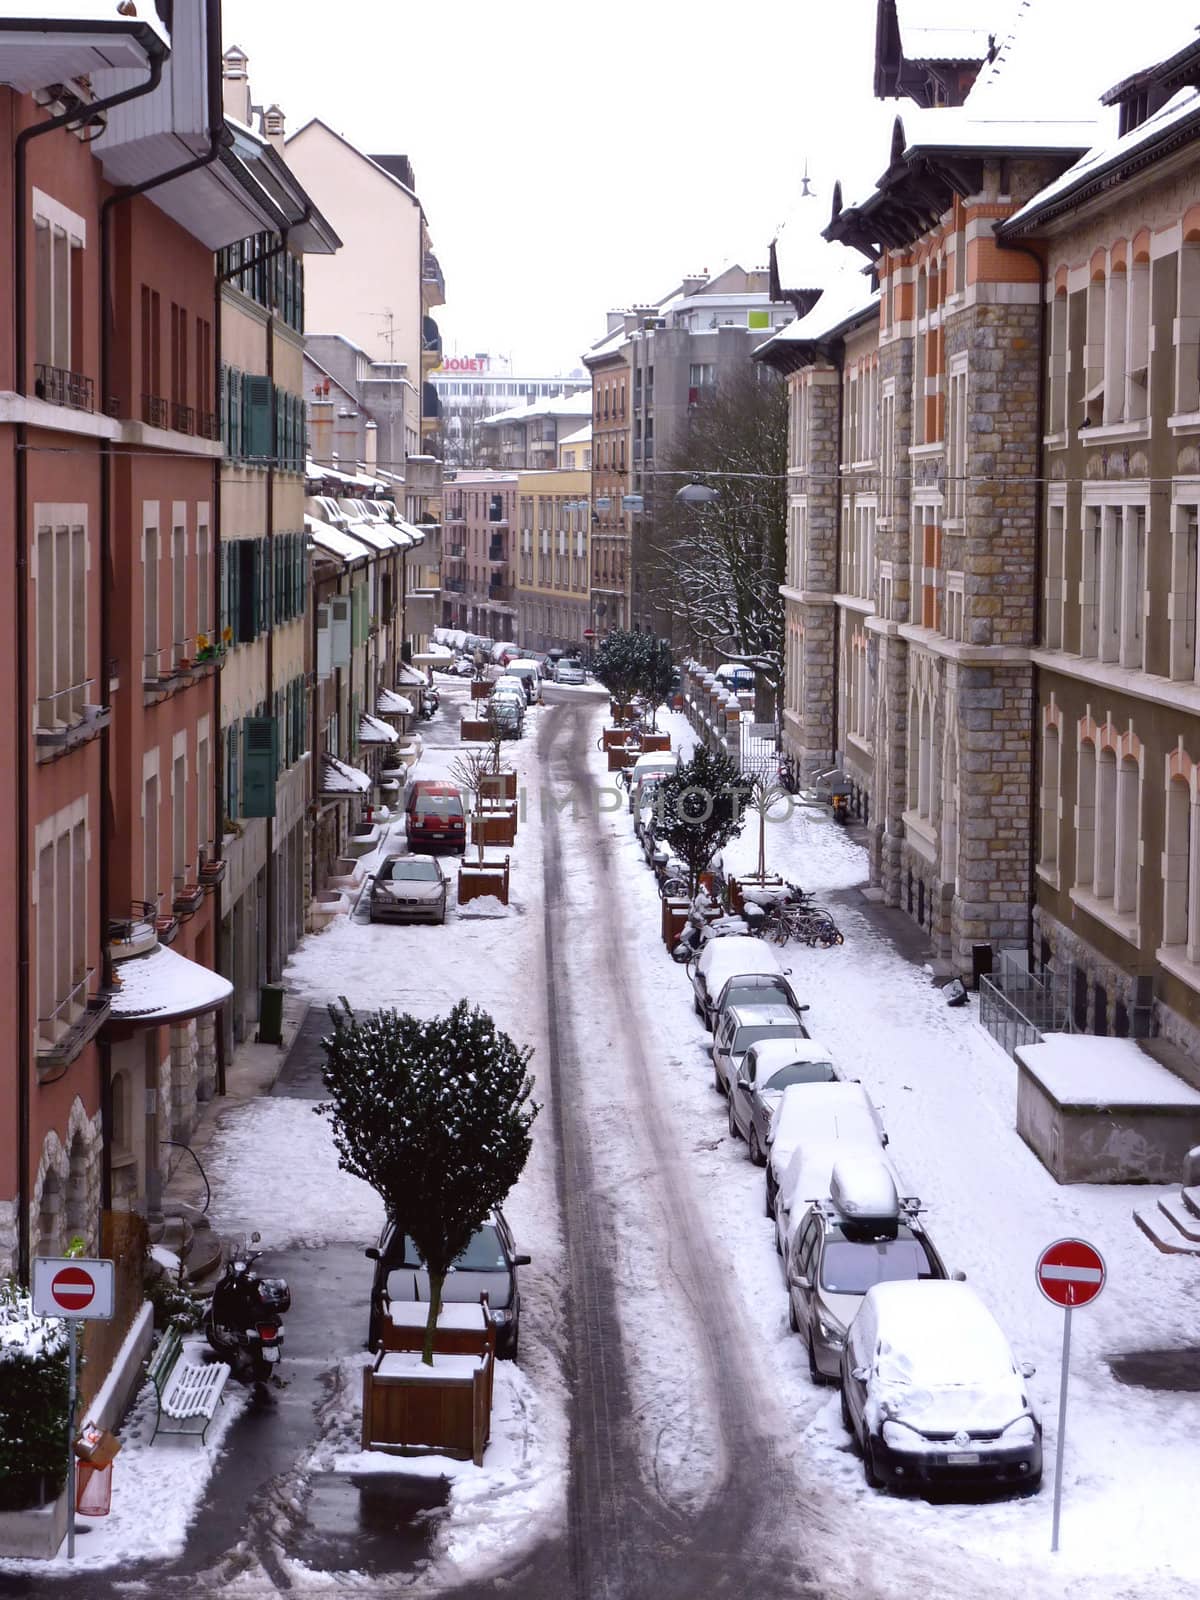 Geneva snowy street by winter by Elenaphotos21